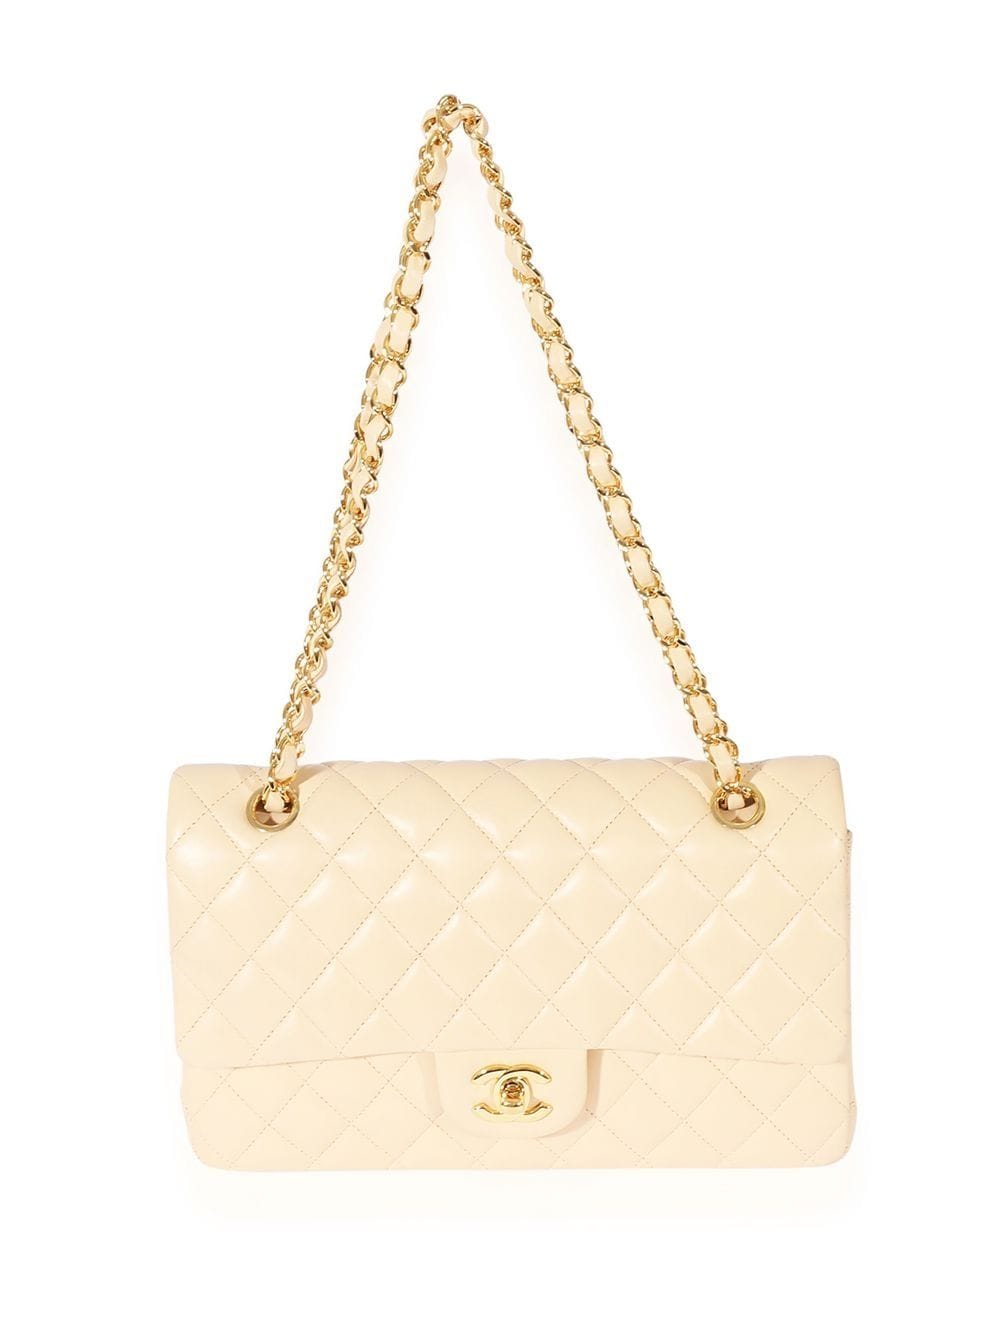 Luxury Vlog Sale & Why I'm Selling These Handbags & SLGs